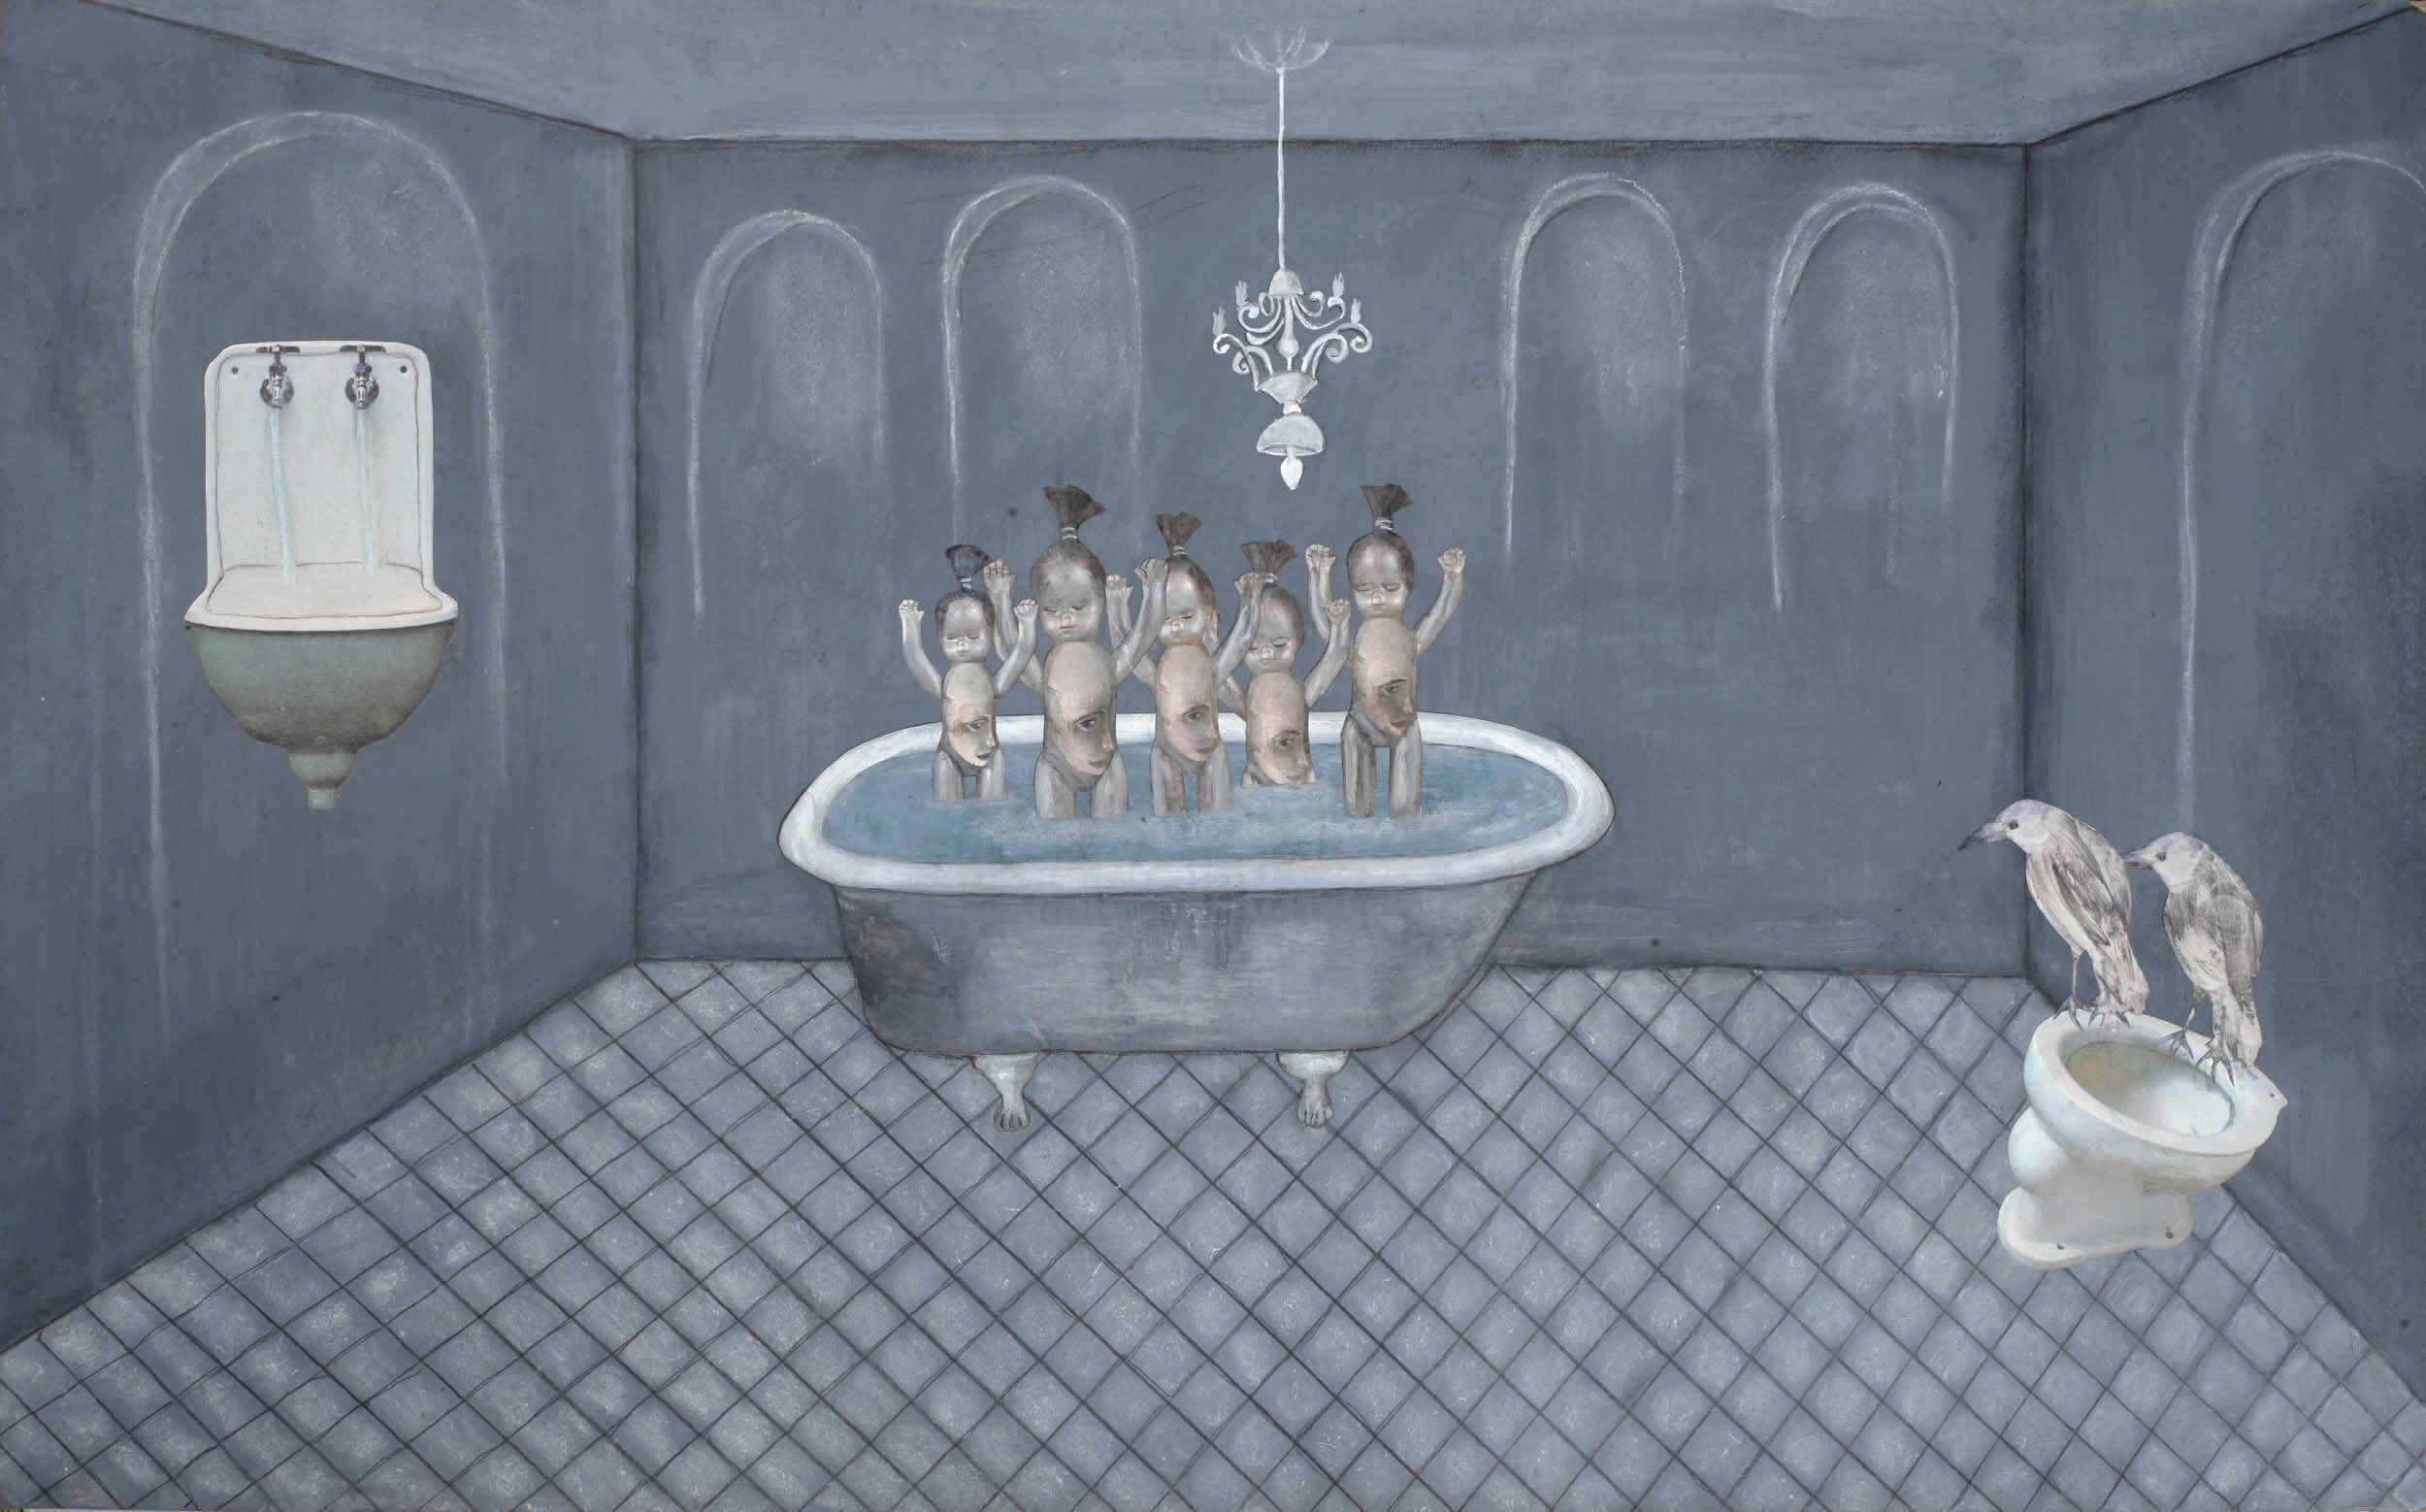  Bathtub, 2018, mixed media painting, 80 x 50 cm 